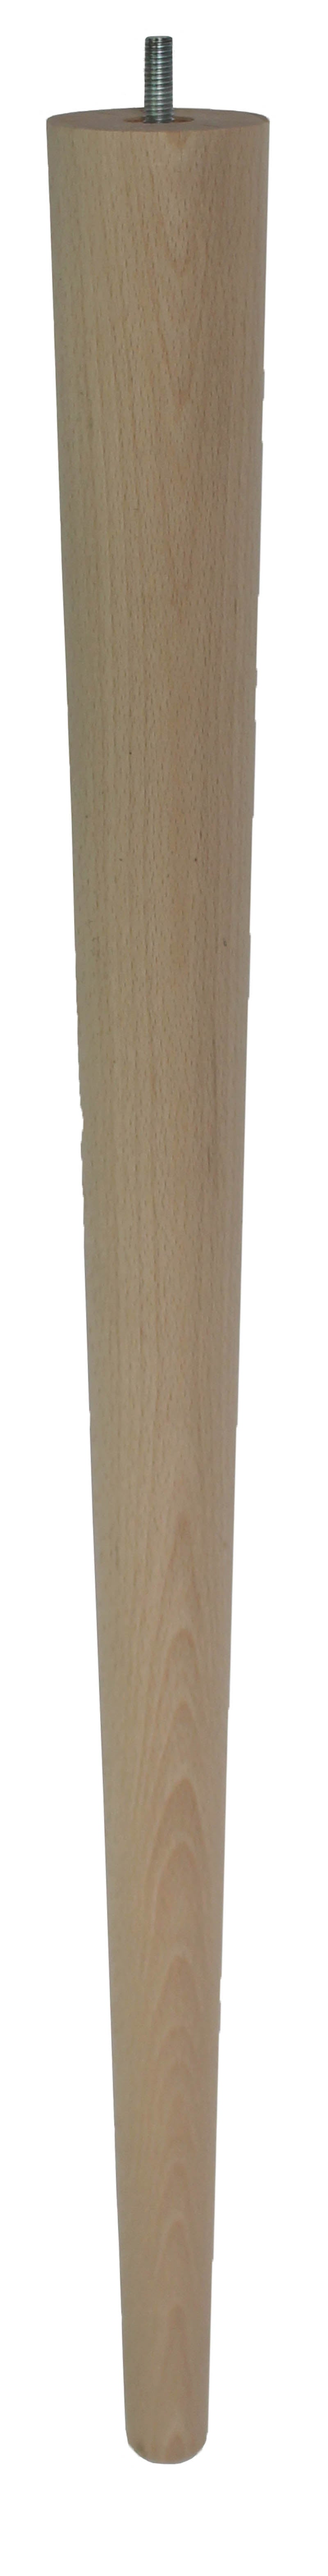 McCobb Solid Oak Table Legs Short - Raw Finish - Set of 4 - with Standard 8mm Dowel Screw Fixing (M8)